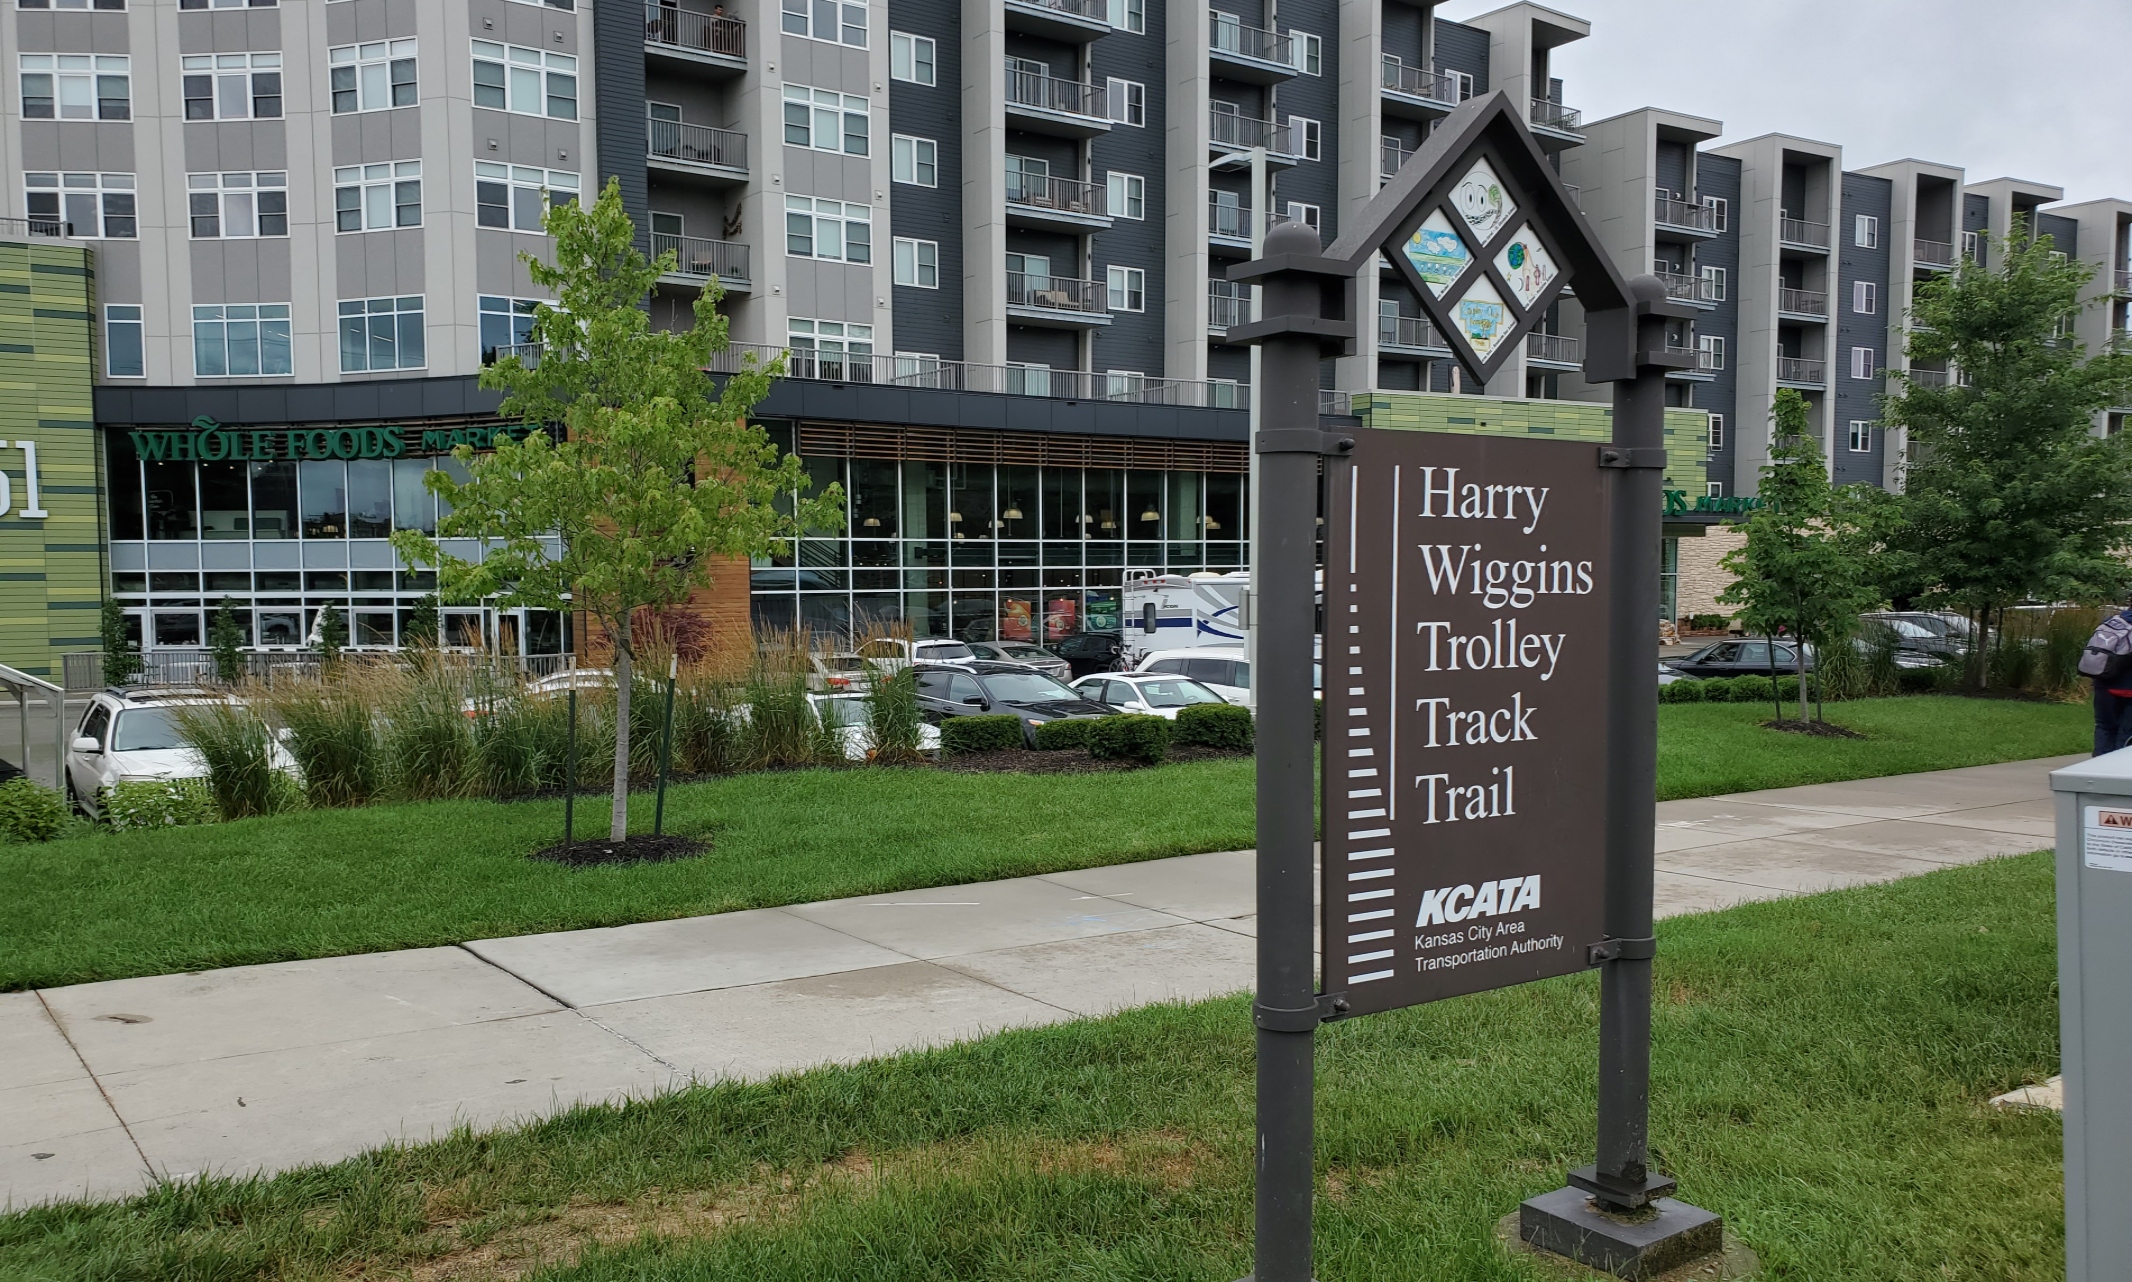 The Harry Wiggins trolley track trail